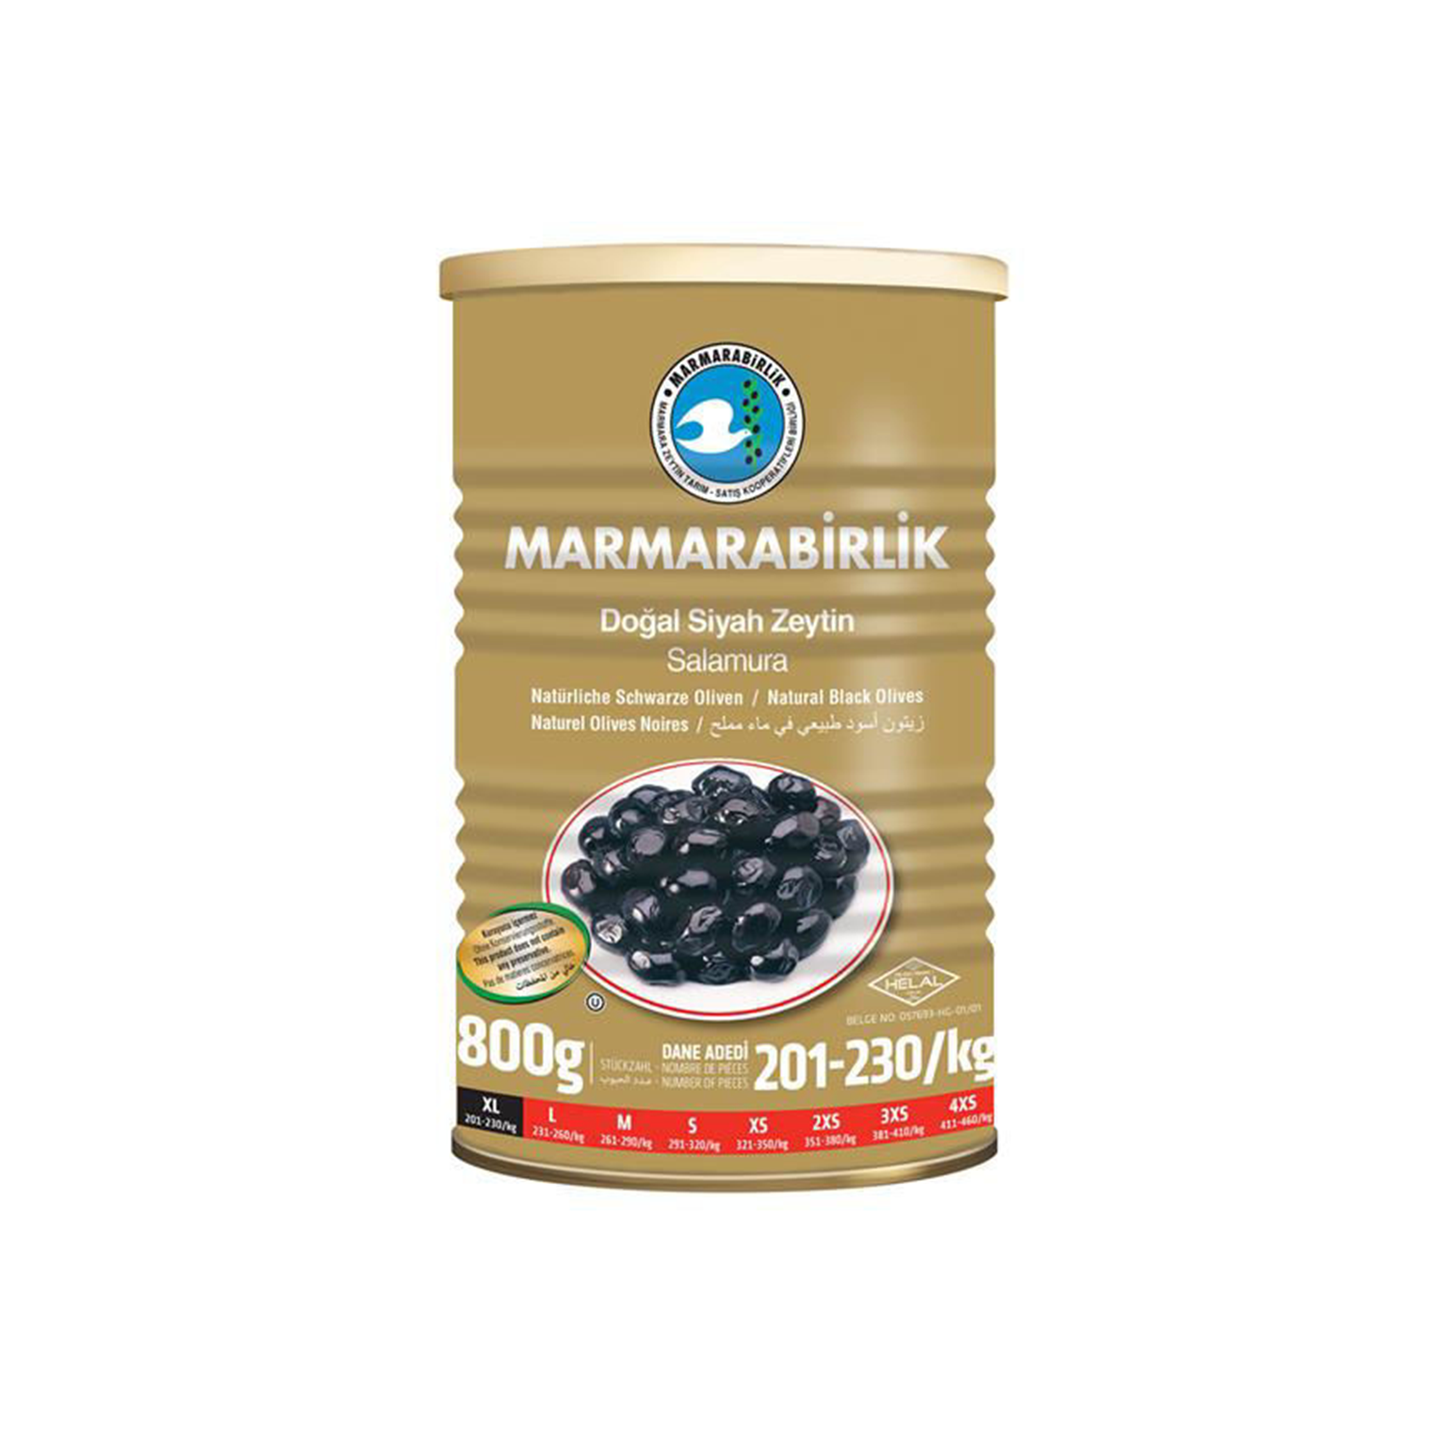 Marmarabirlik Black Olive XL In Salt Water 800g